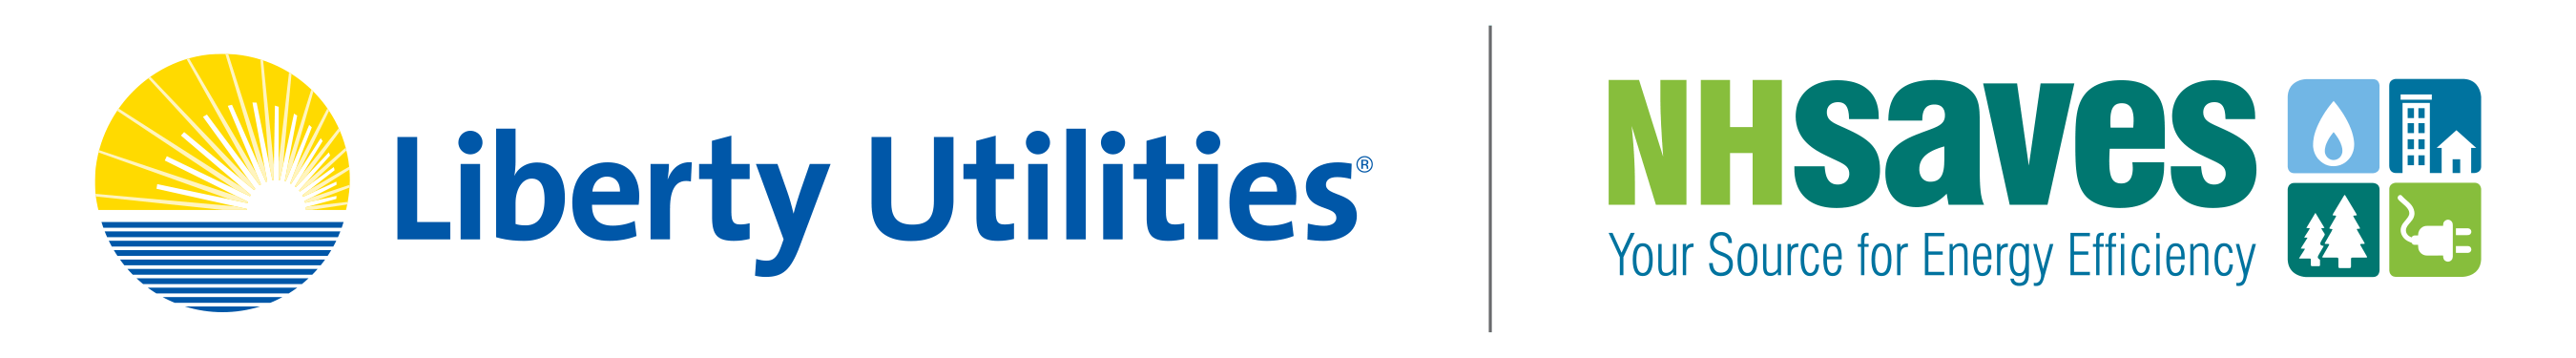 Utilities Logo - Liberty Utilities Gas Marketplace | Home